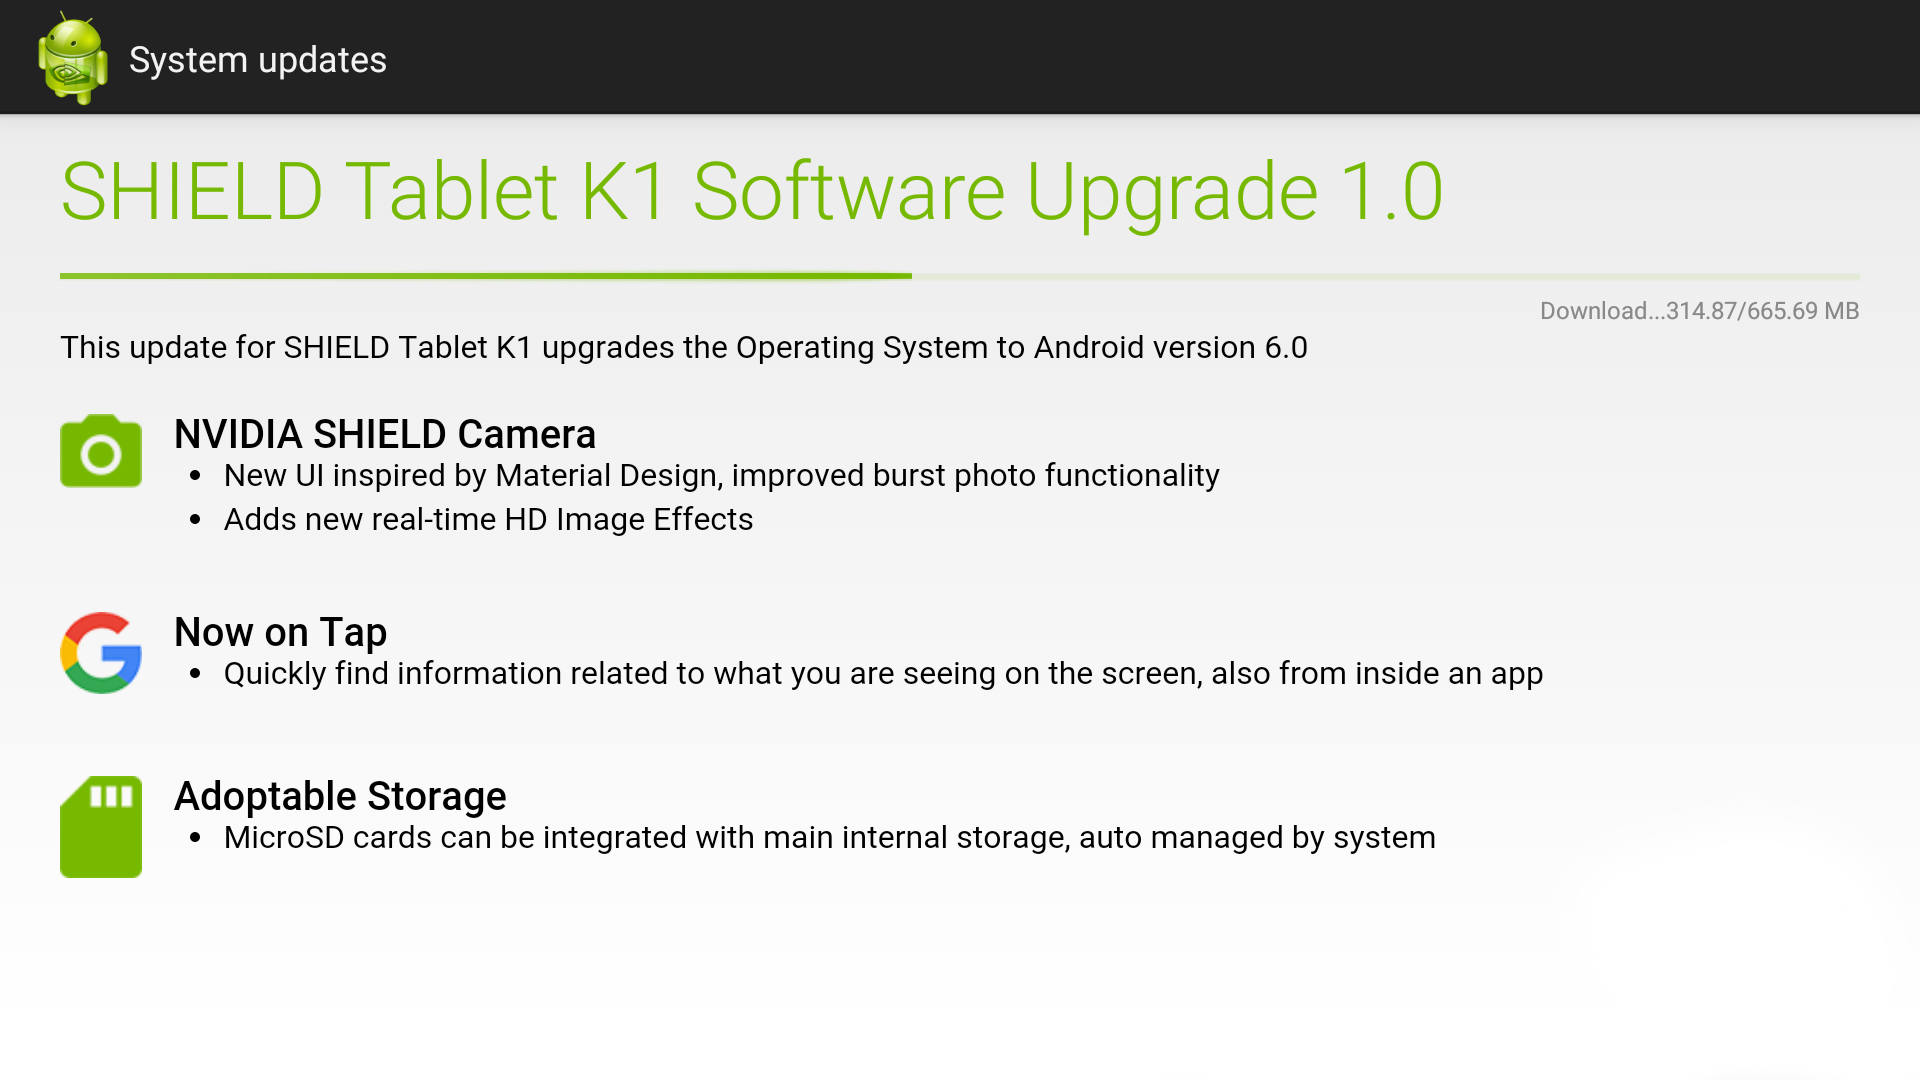 Nvidia SHIELD Tablet K1 Software Upgrade 1.0 Android 6.0